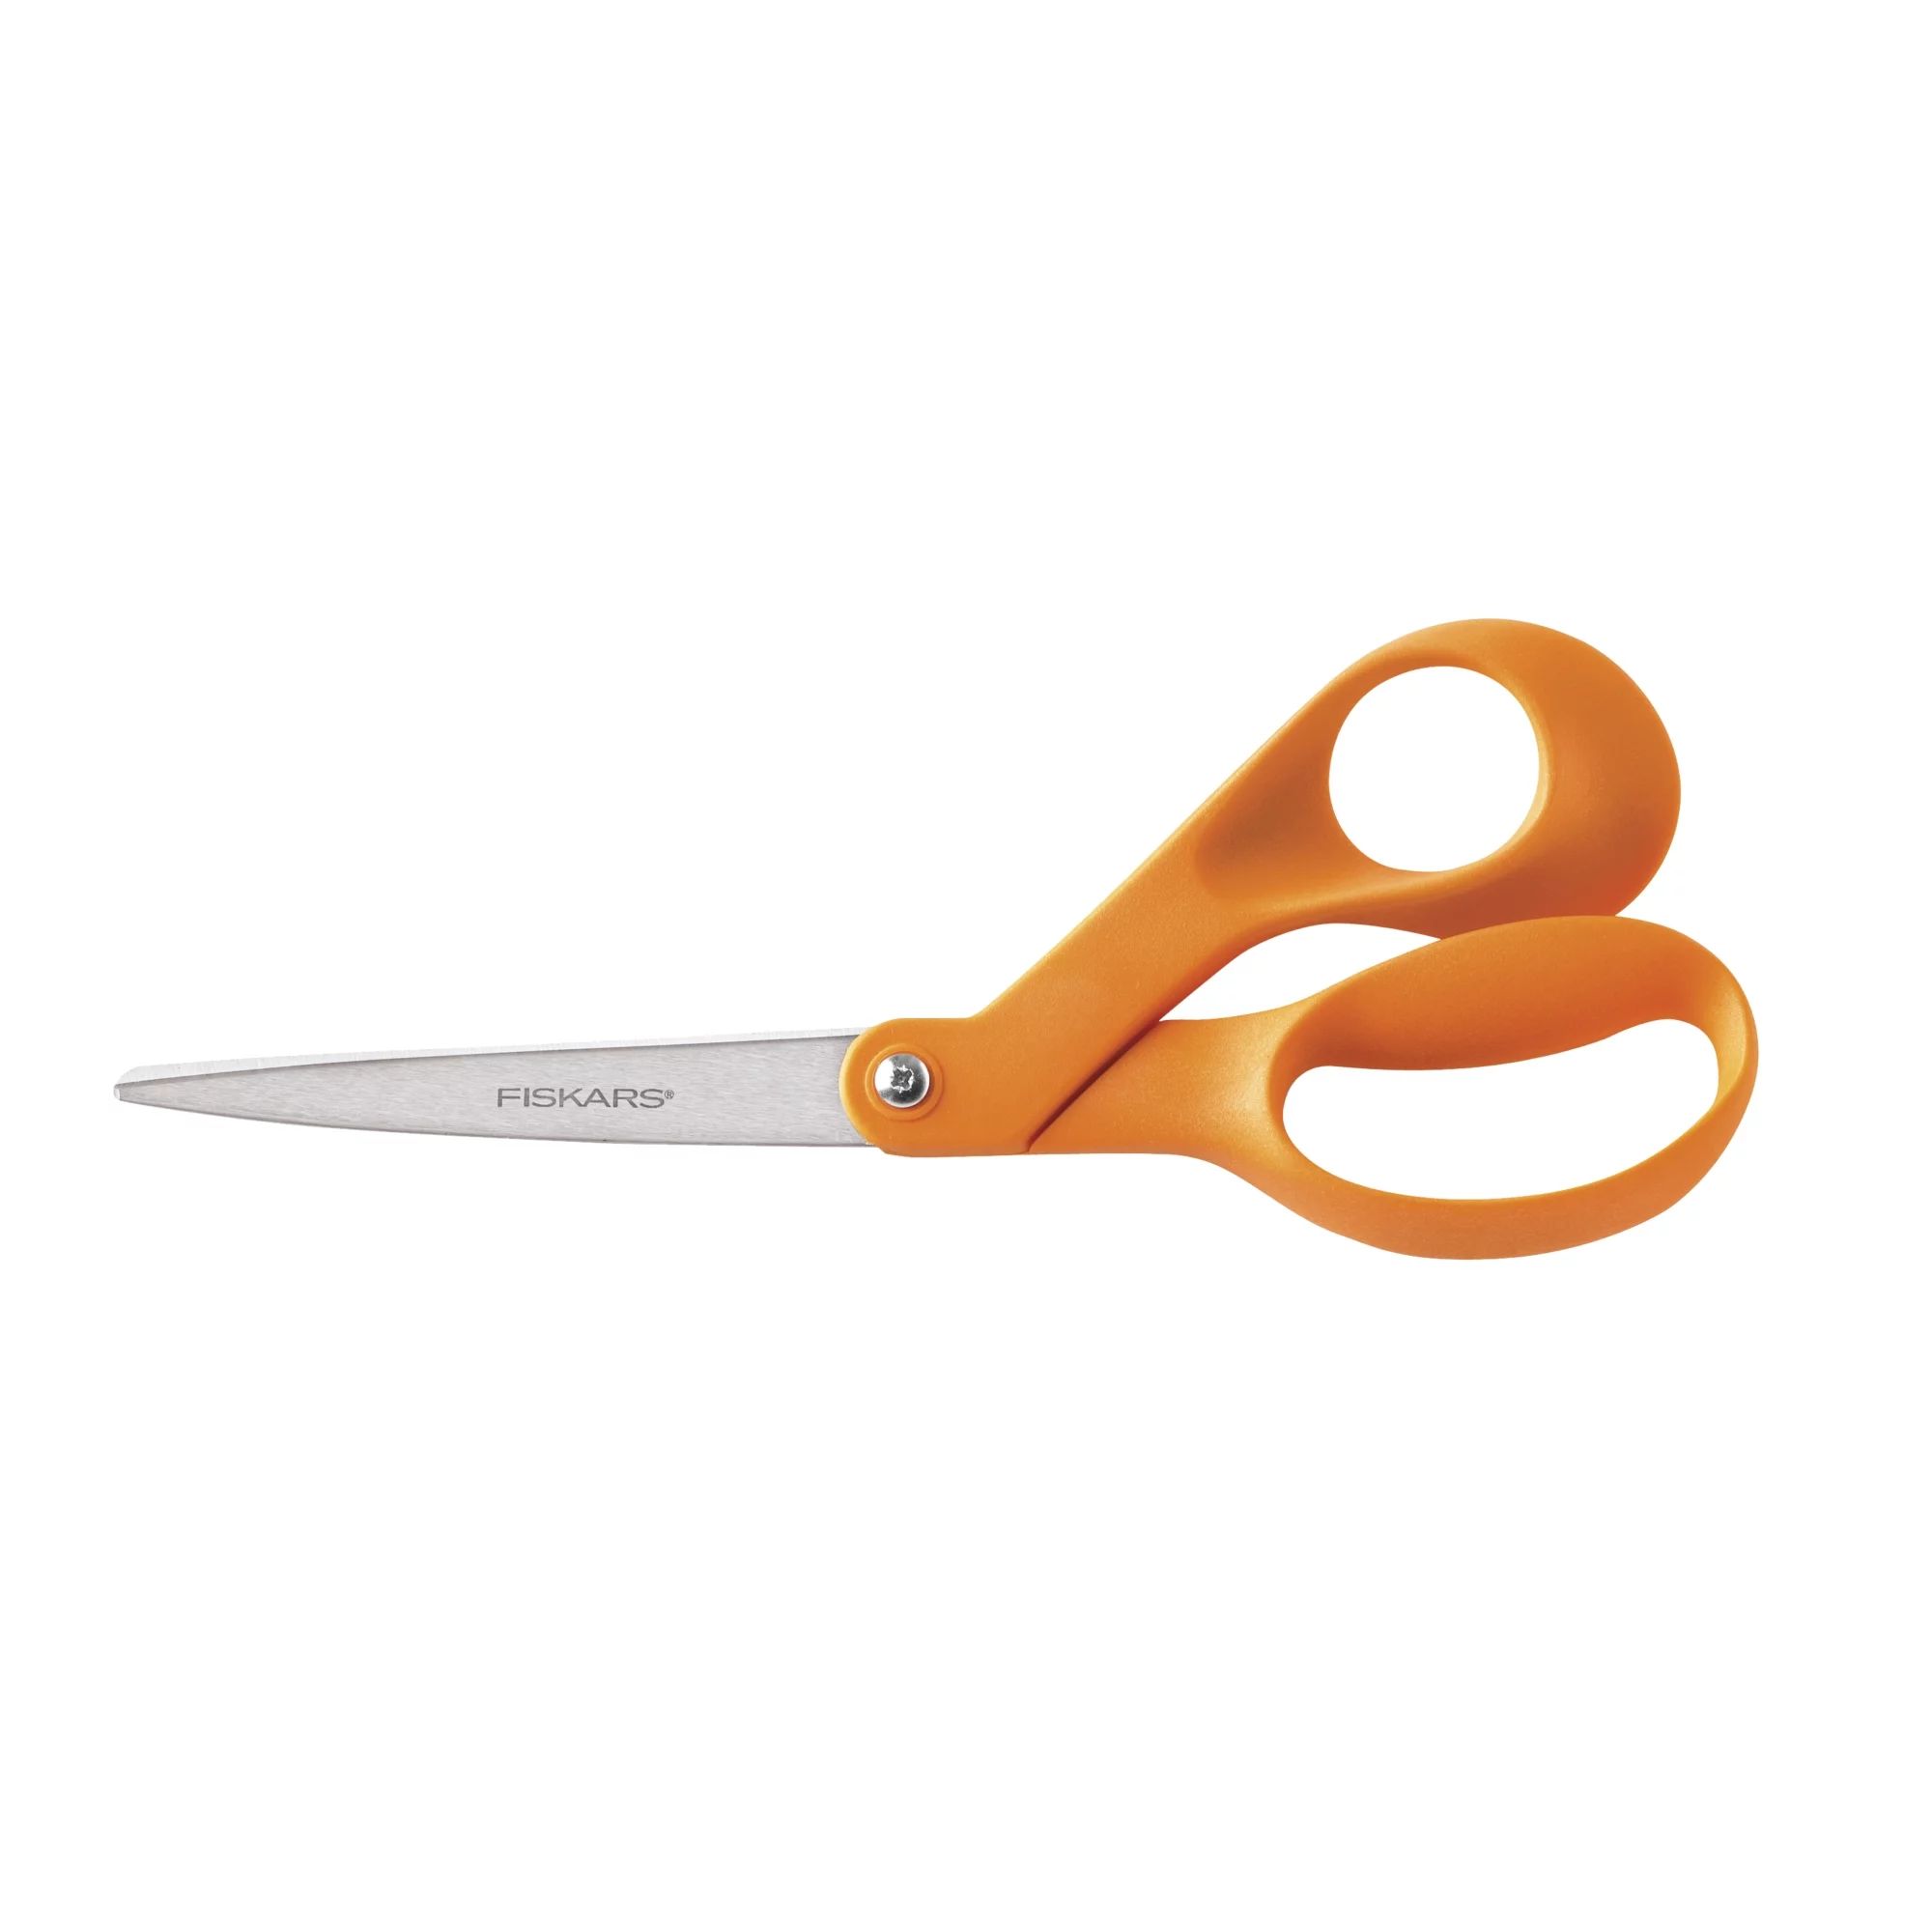 Fiskars Original Orange-handled Scissors, 8 inch | Walmart (US)